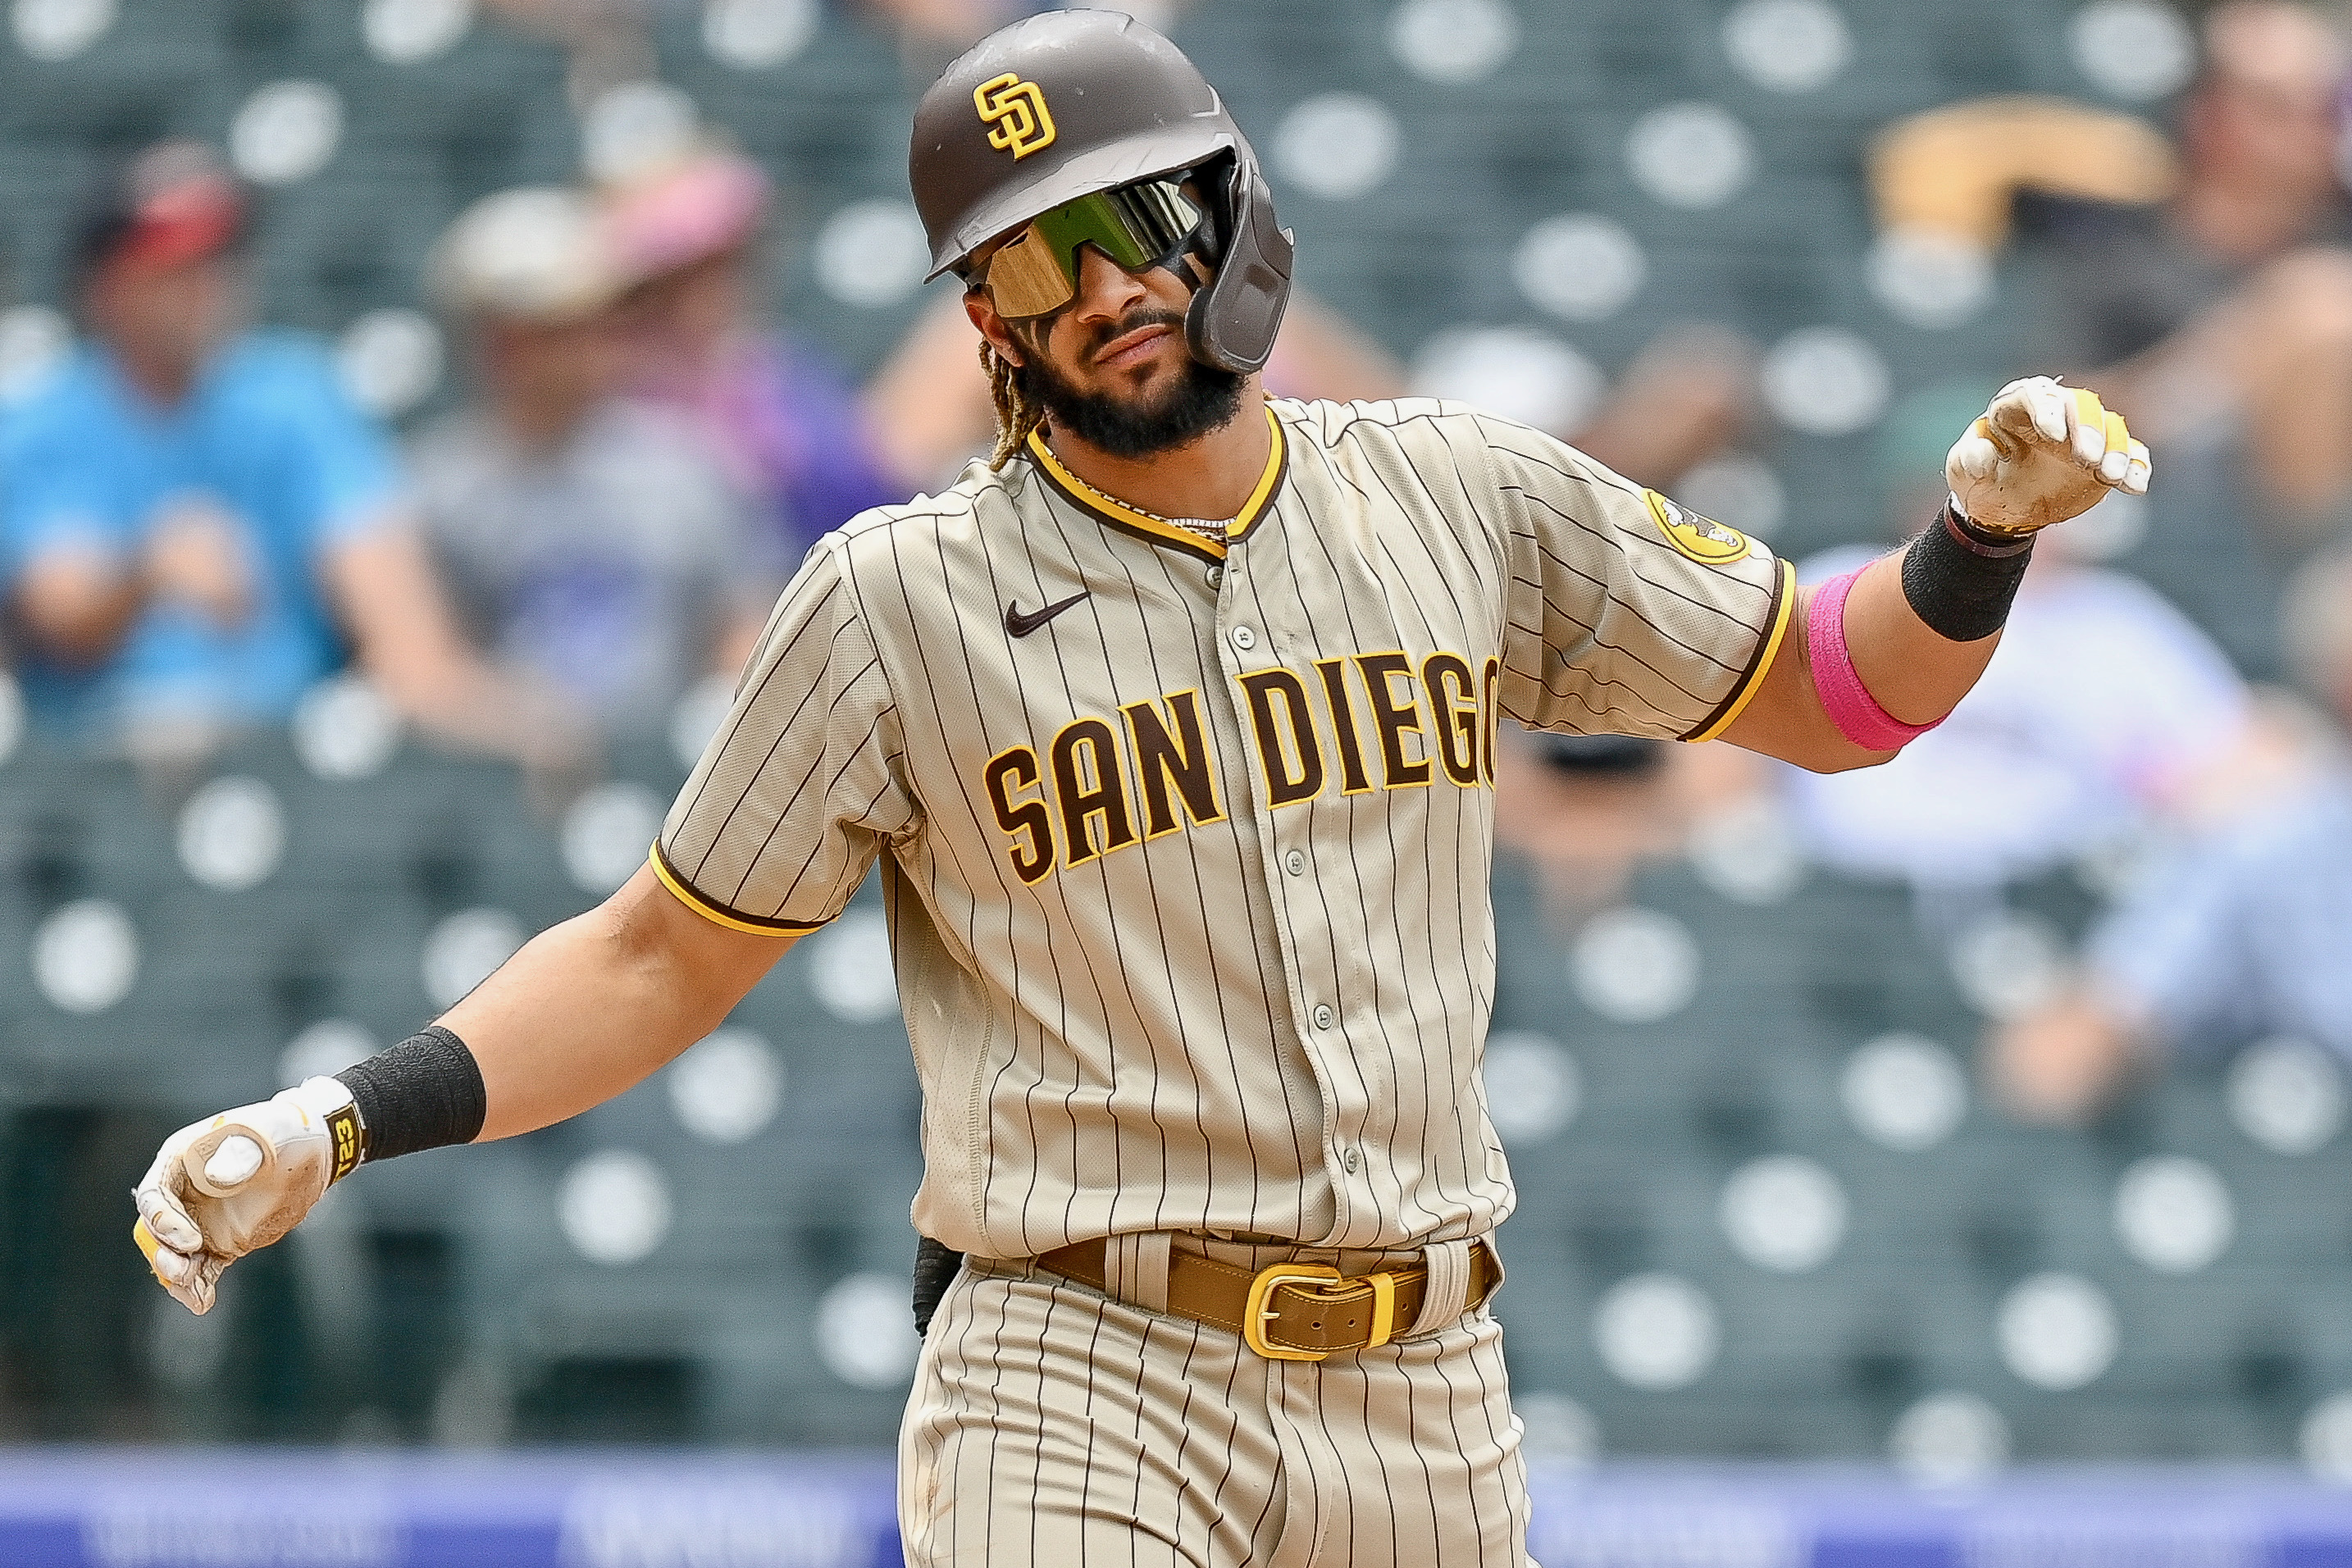 San Diego Padres - Go for Joe. #HungryForMore